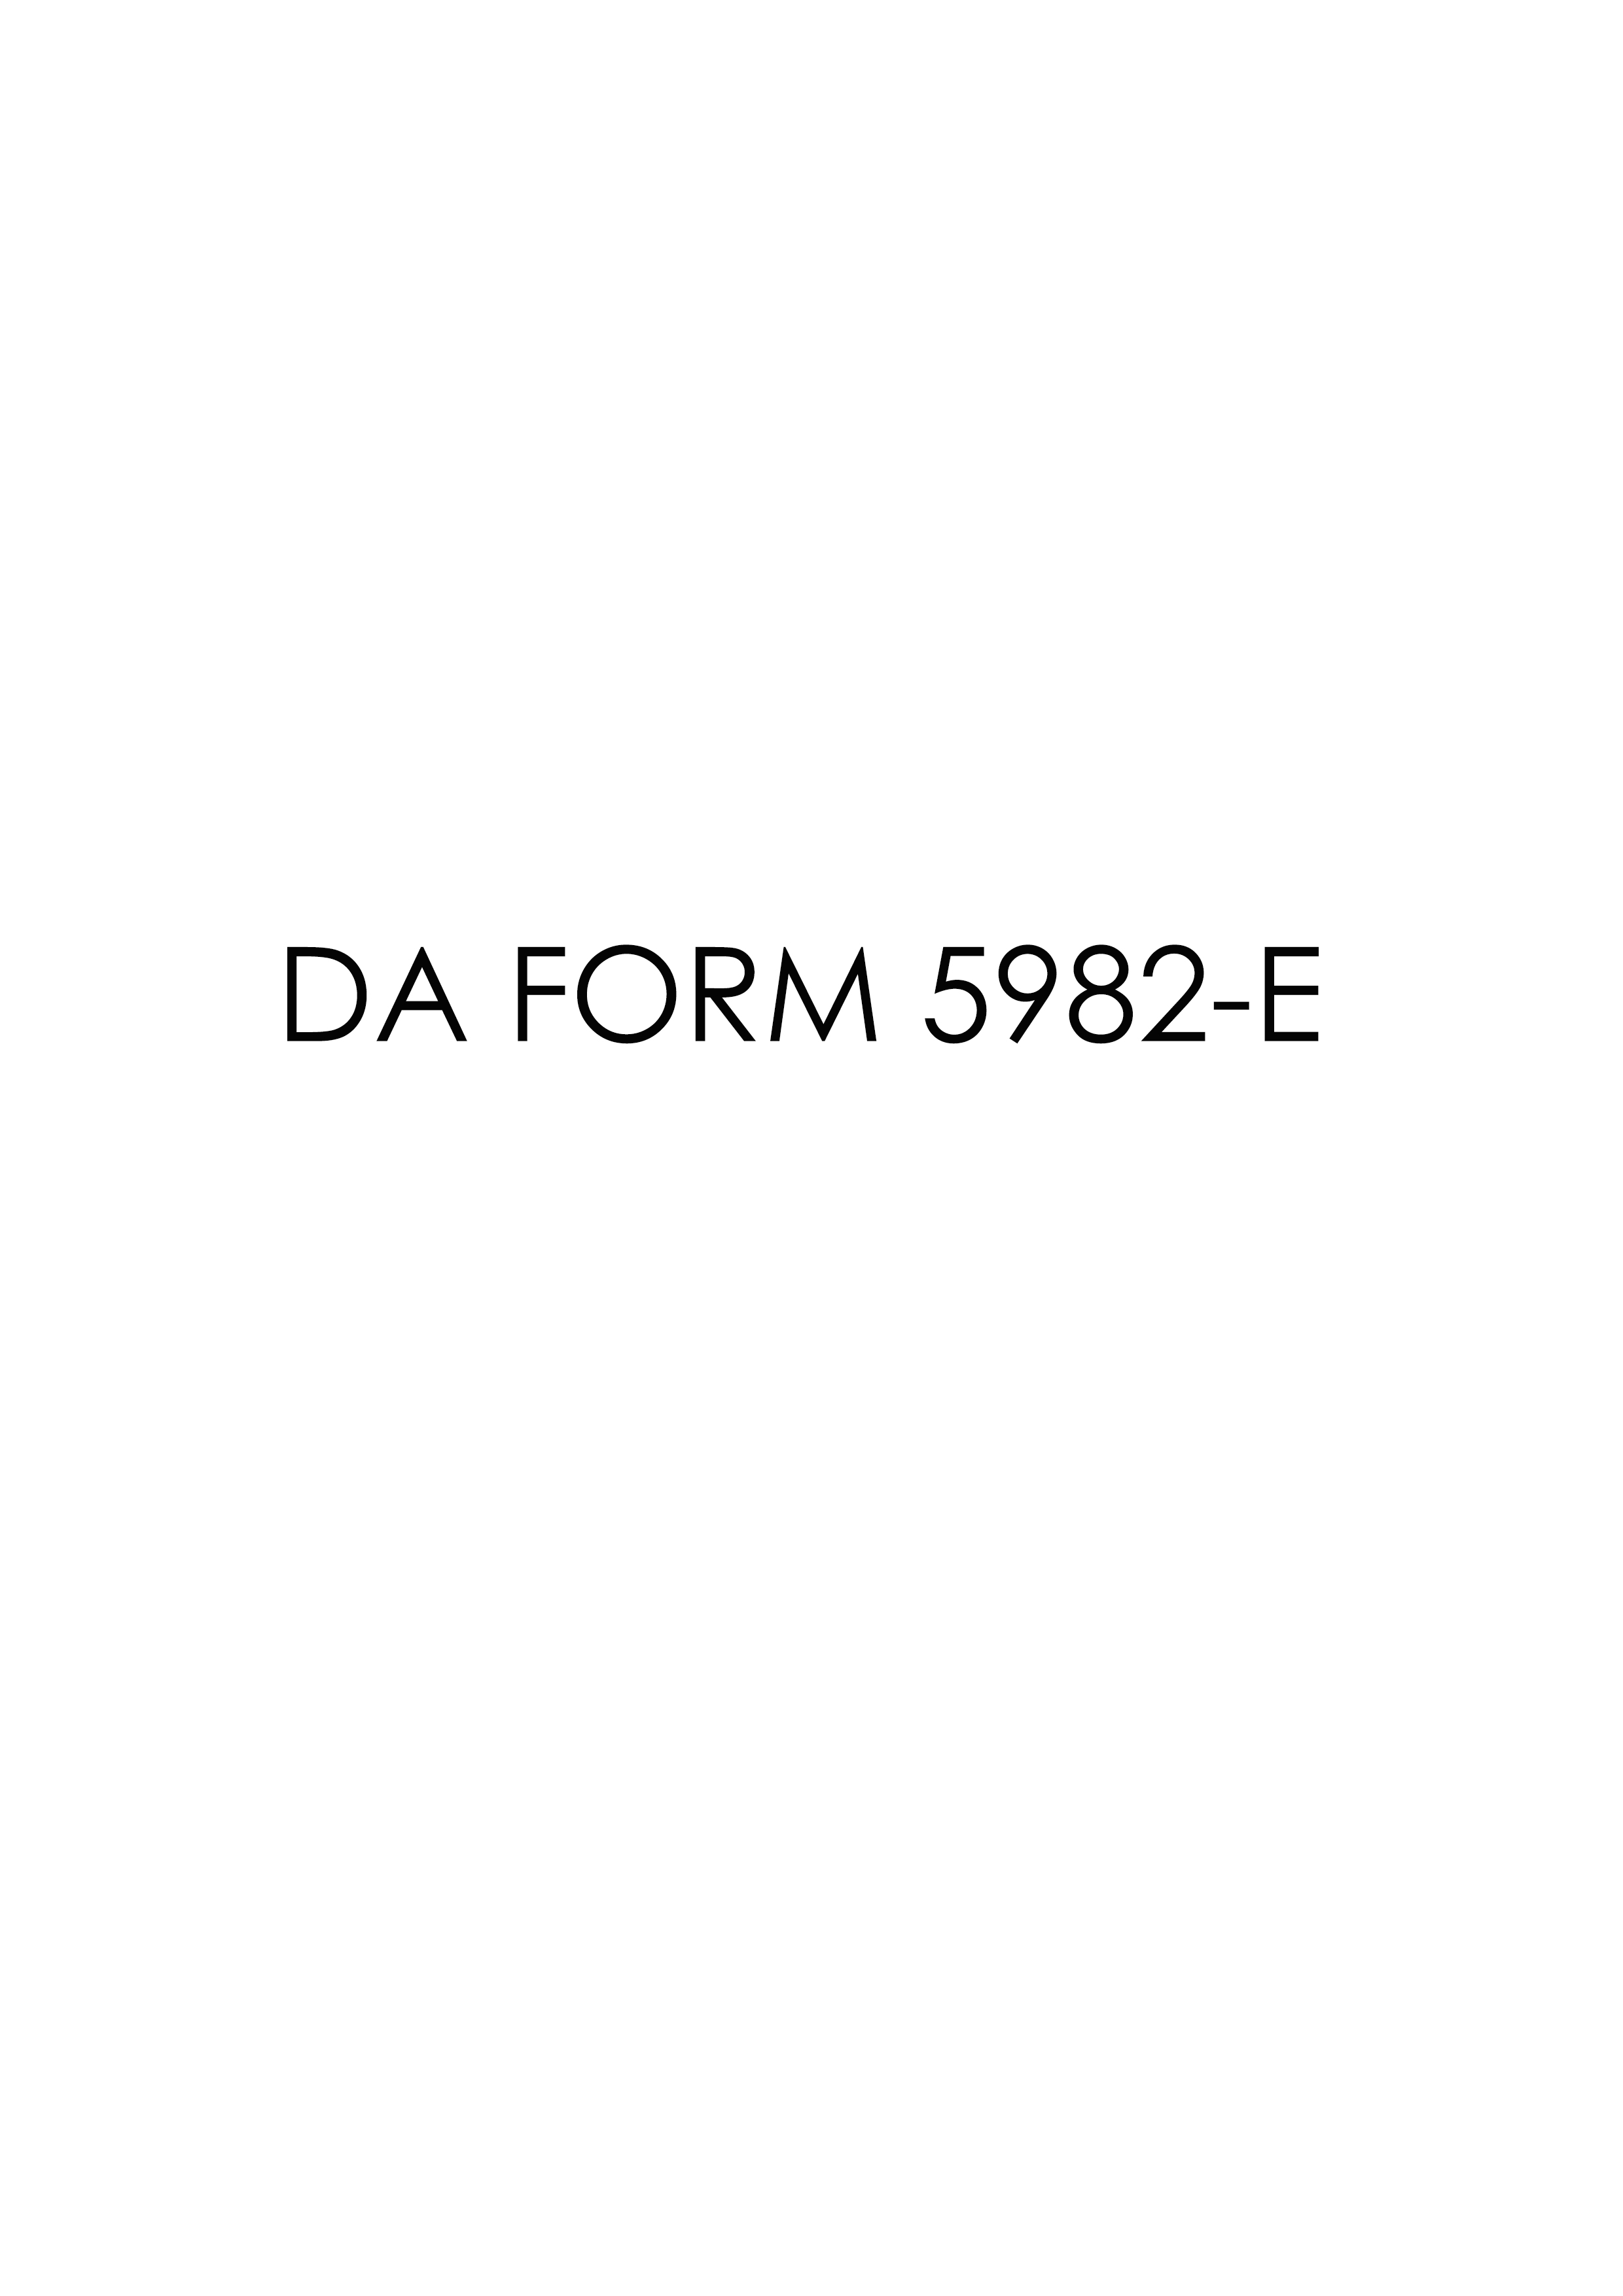 da Form 5982-E fillable